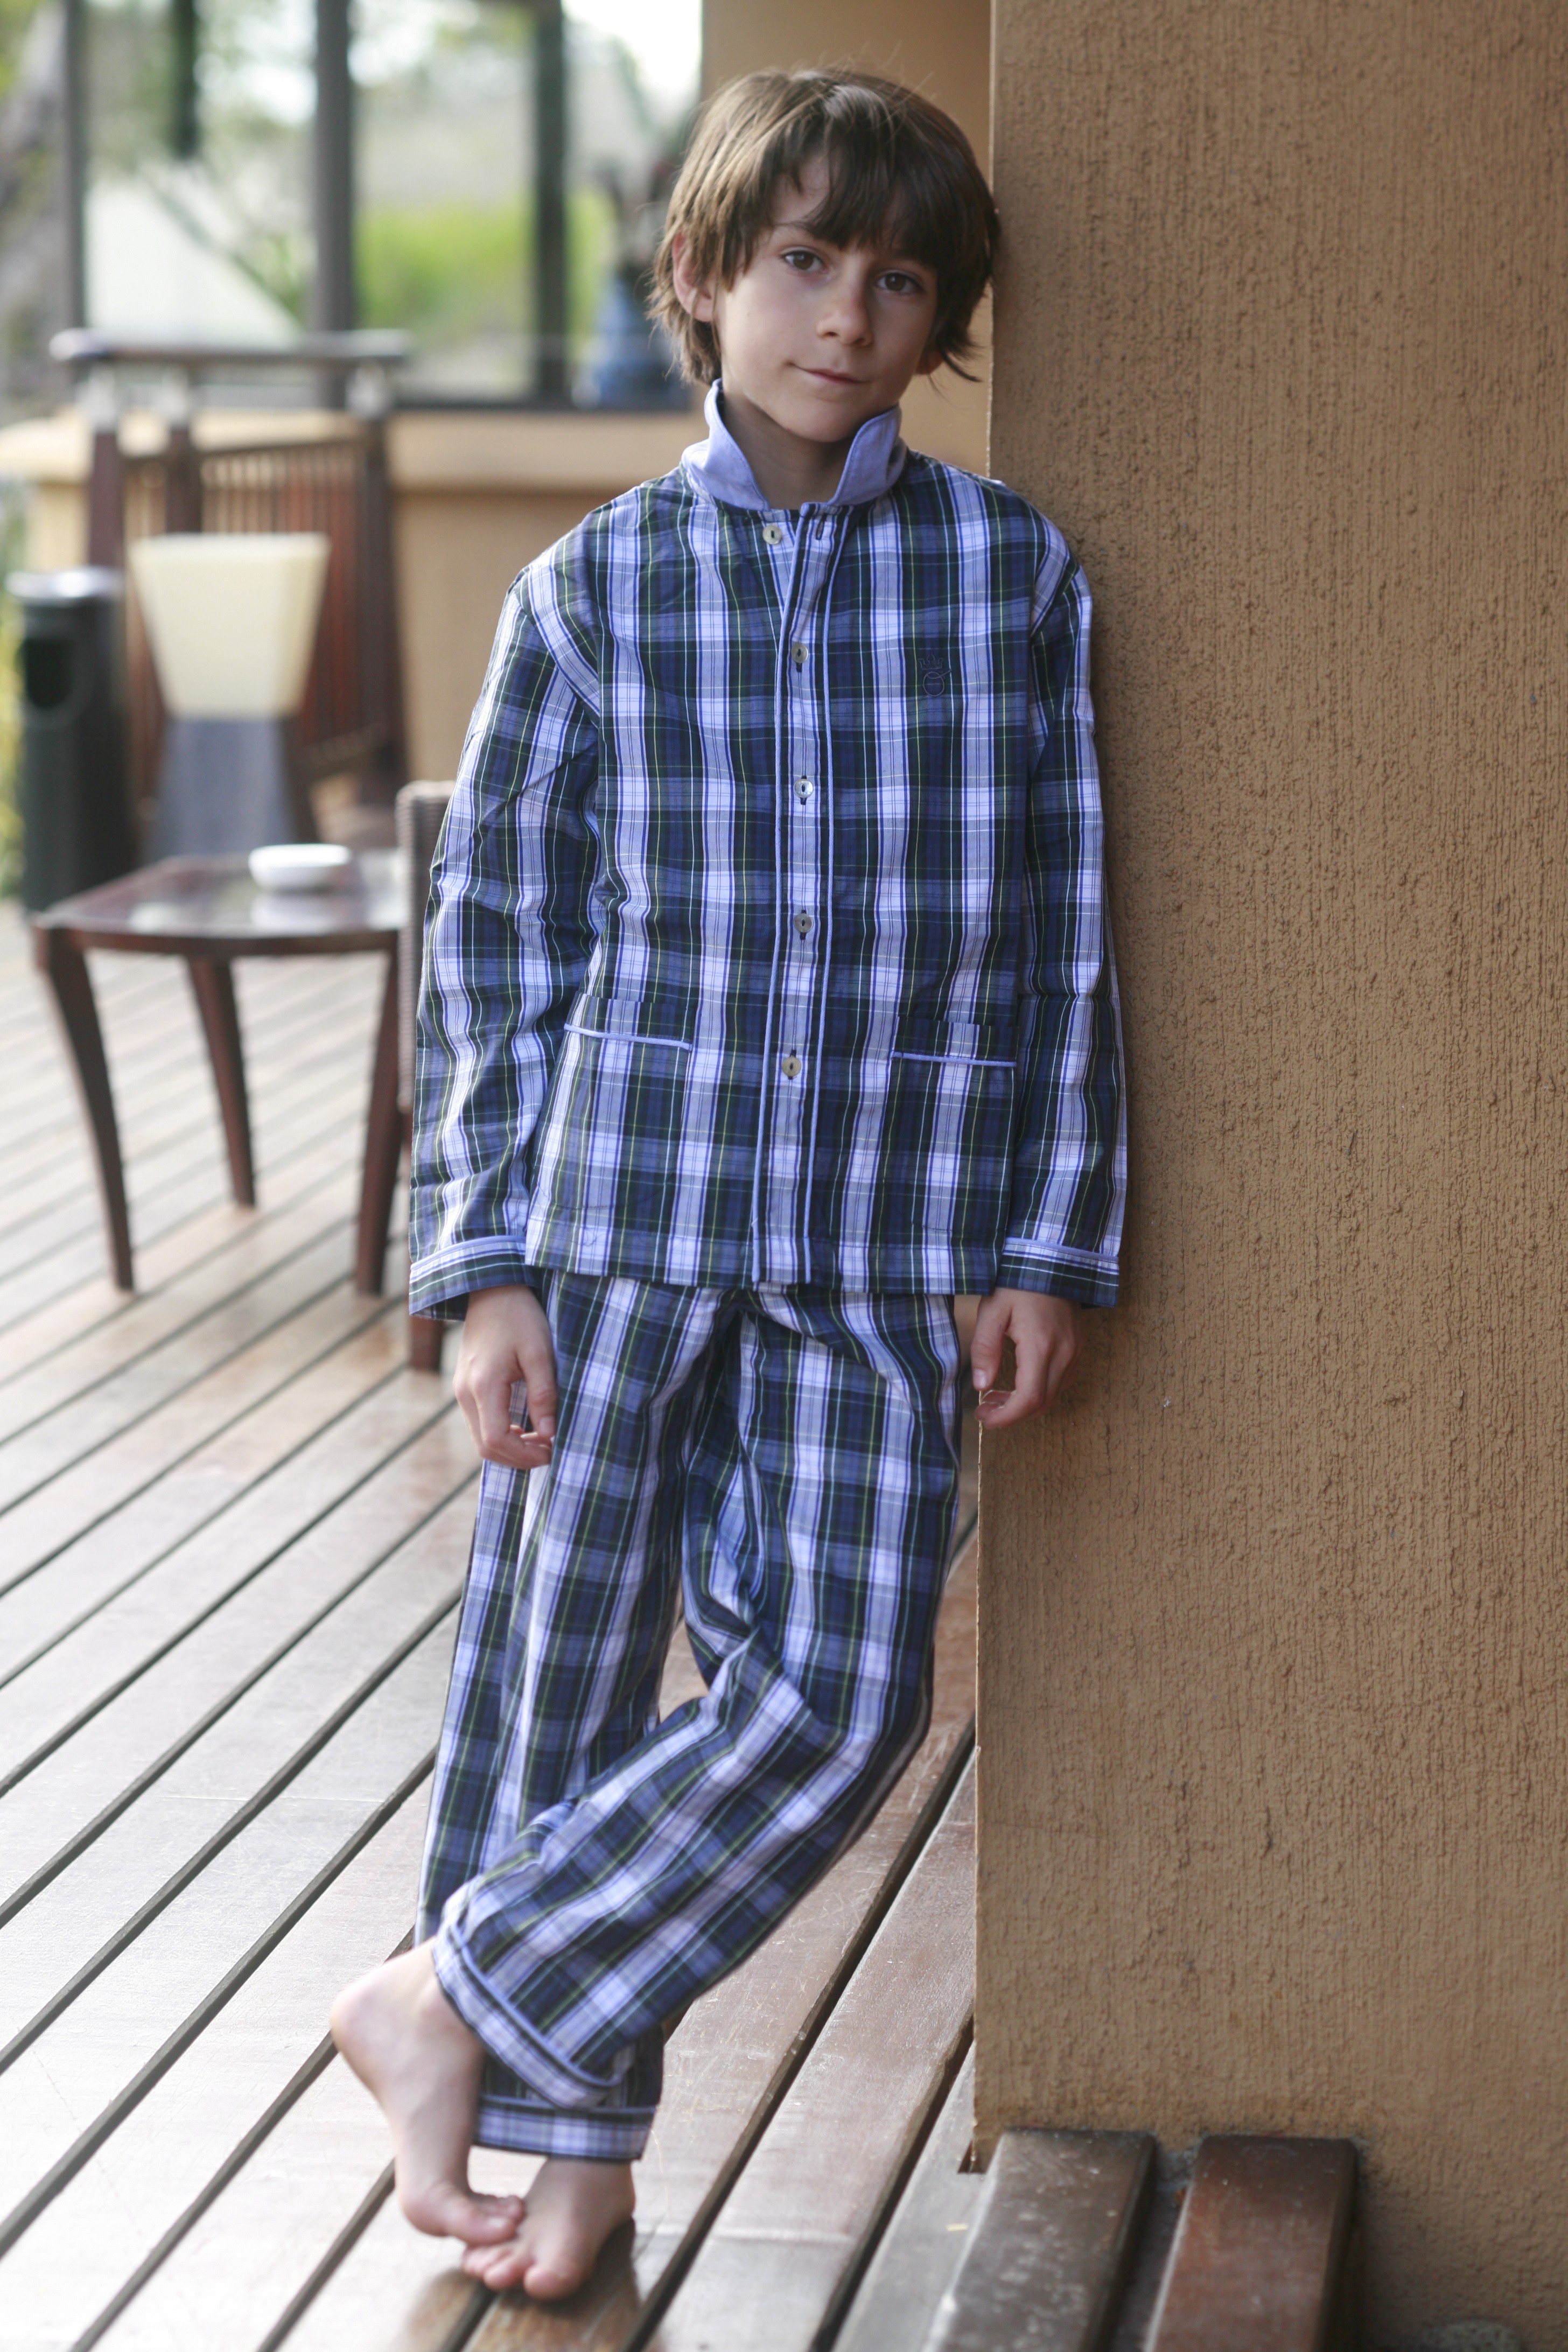 Pyjama garçon 4 ans hiver